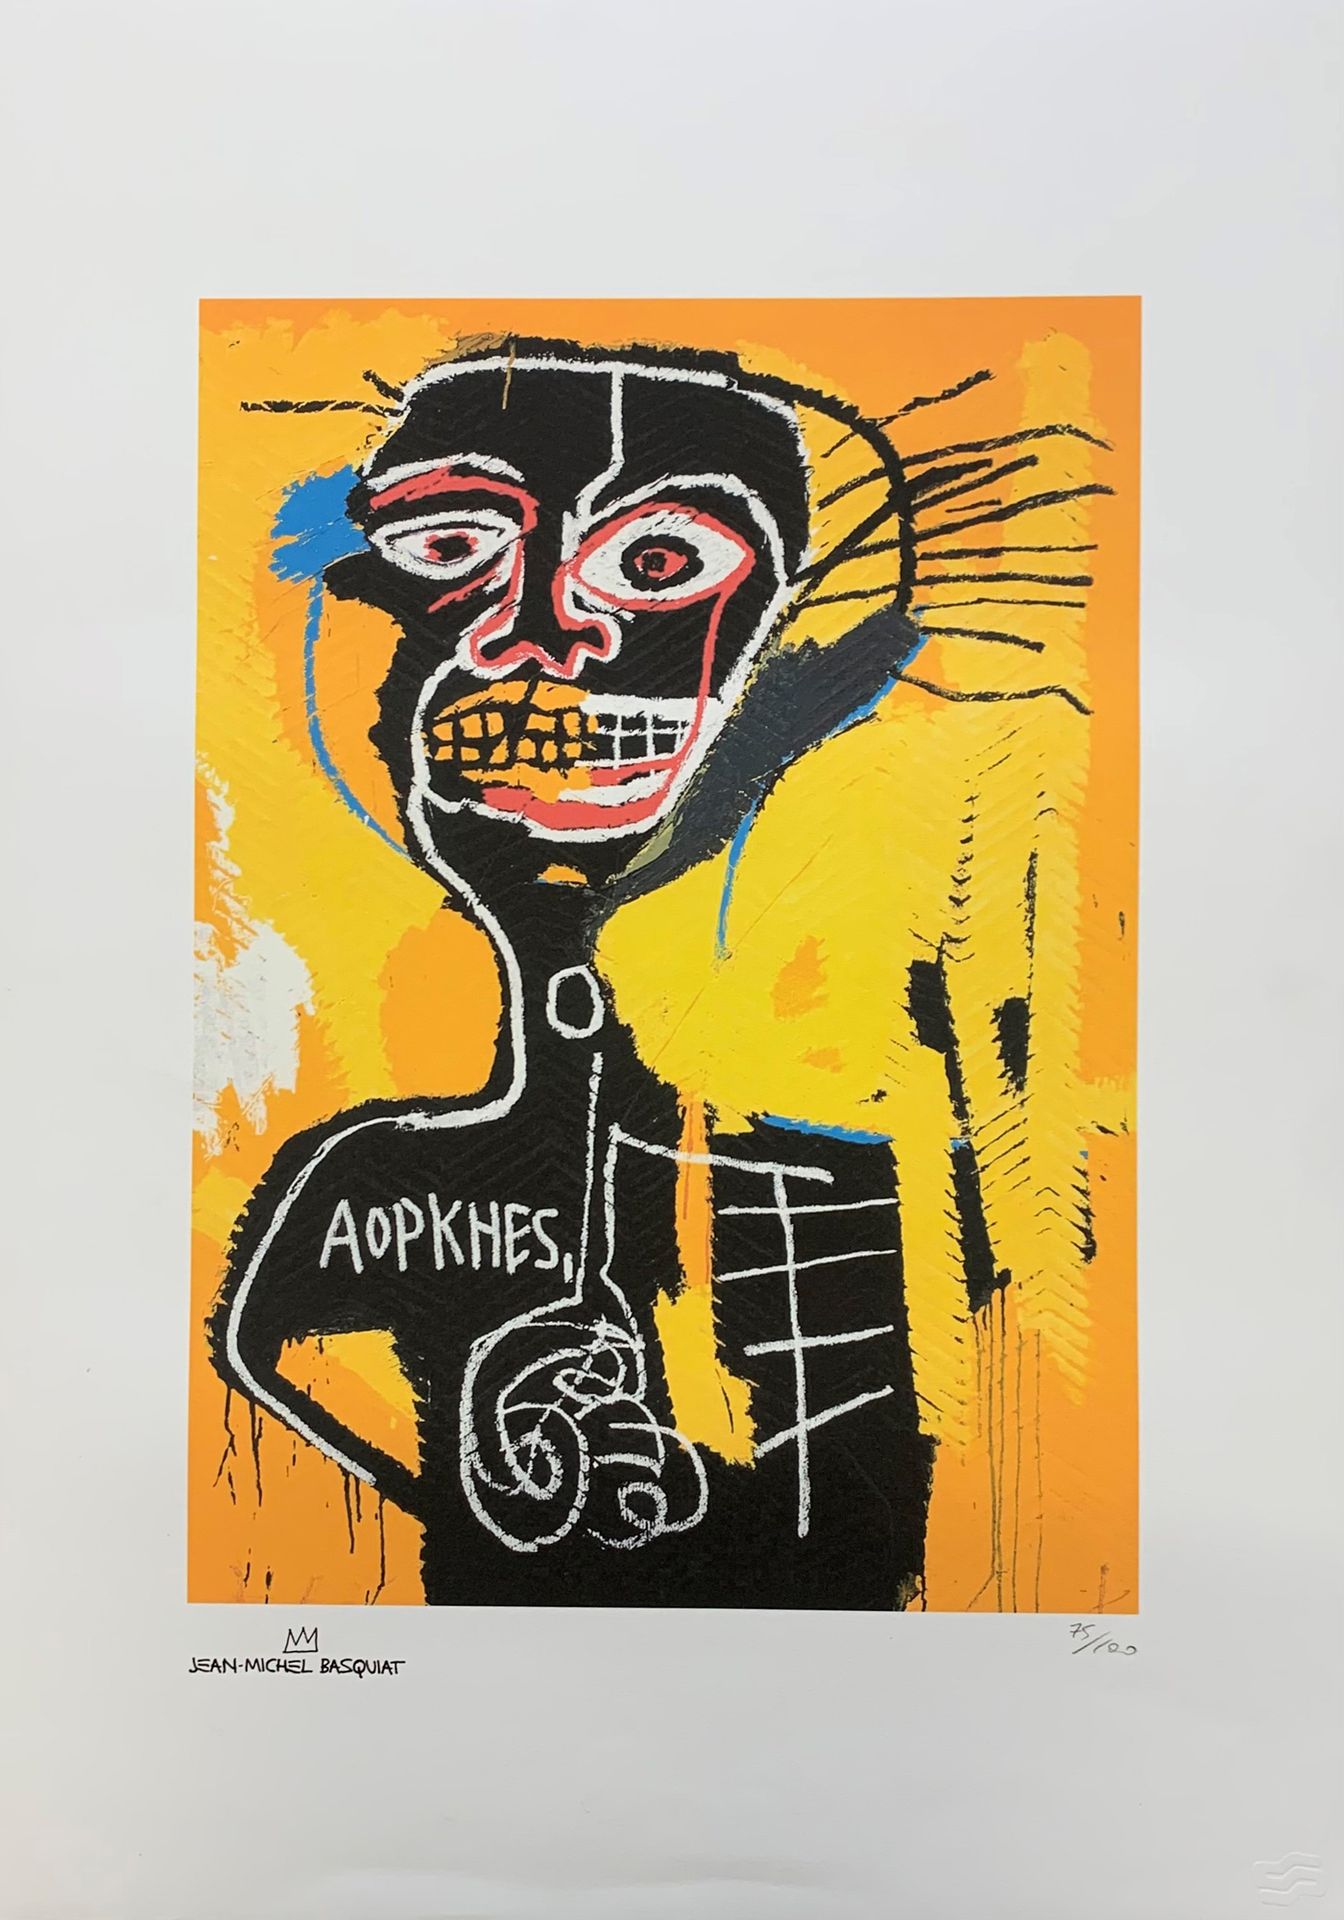 D'APRES JEAN-MICHEL BASQUIAT (1960-1988) AOPKHES, 1984
Offset in color on vellum&hellip;